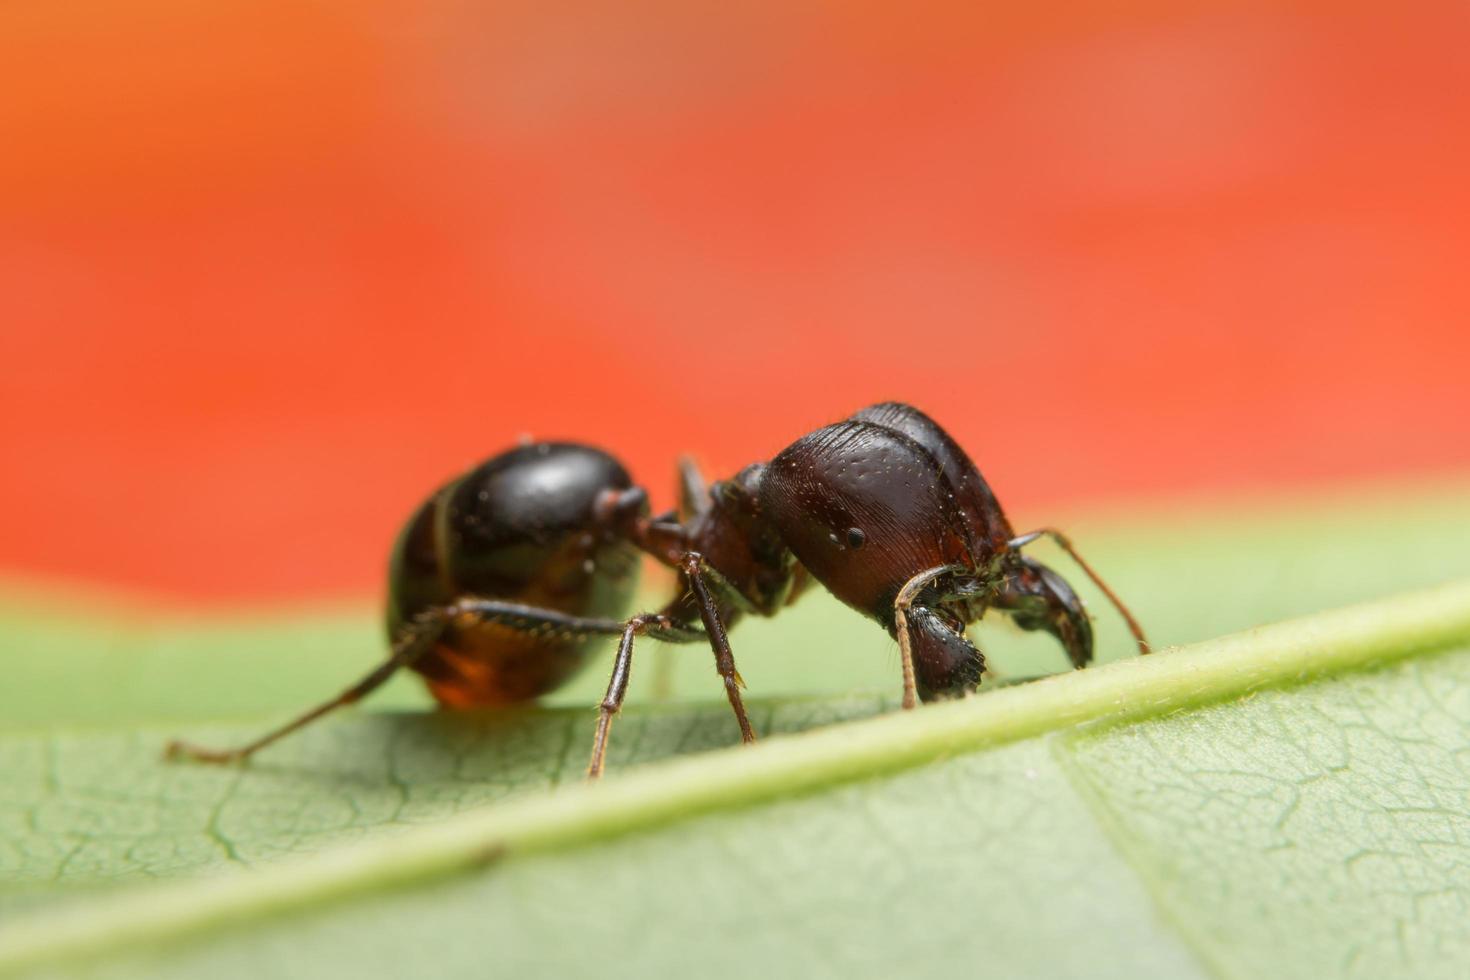 Pheidole jeton driversus ant on a leaf photo